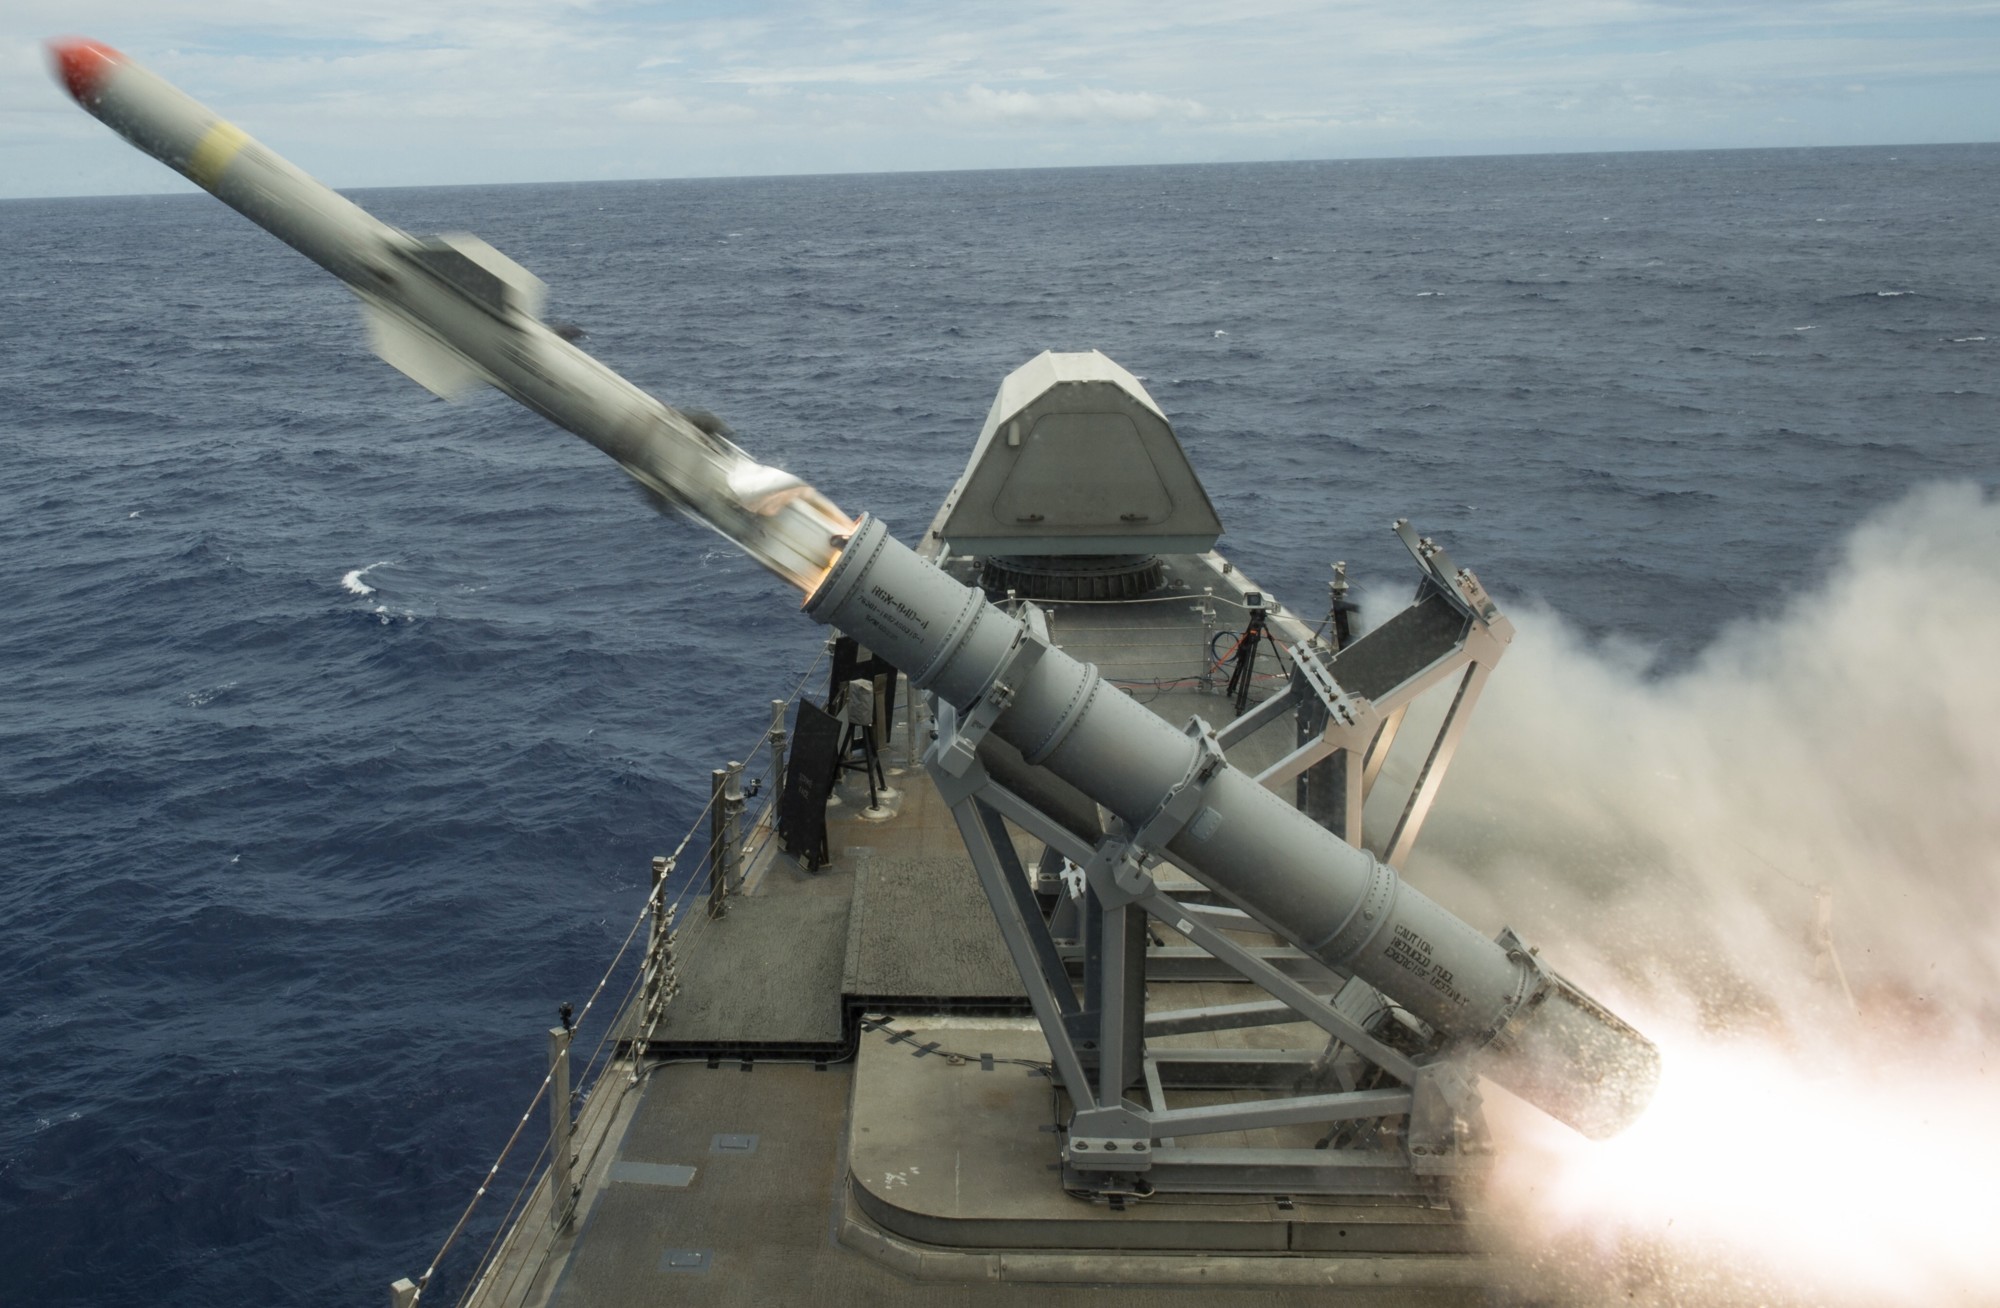 lcs-4 uss coronado independence class littoral combat ship us navy 10 rgm-84 harpoon ssm mk.141 missile launcher